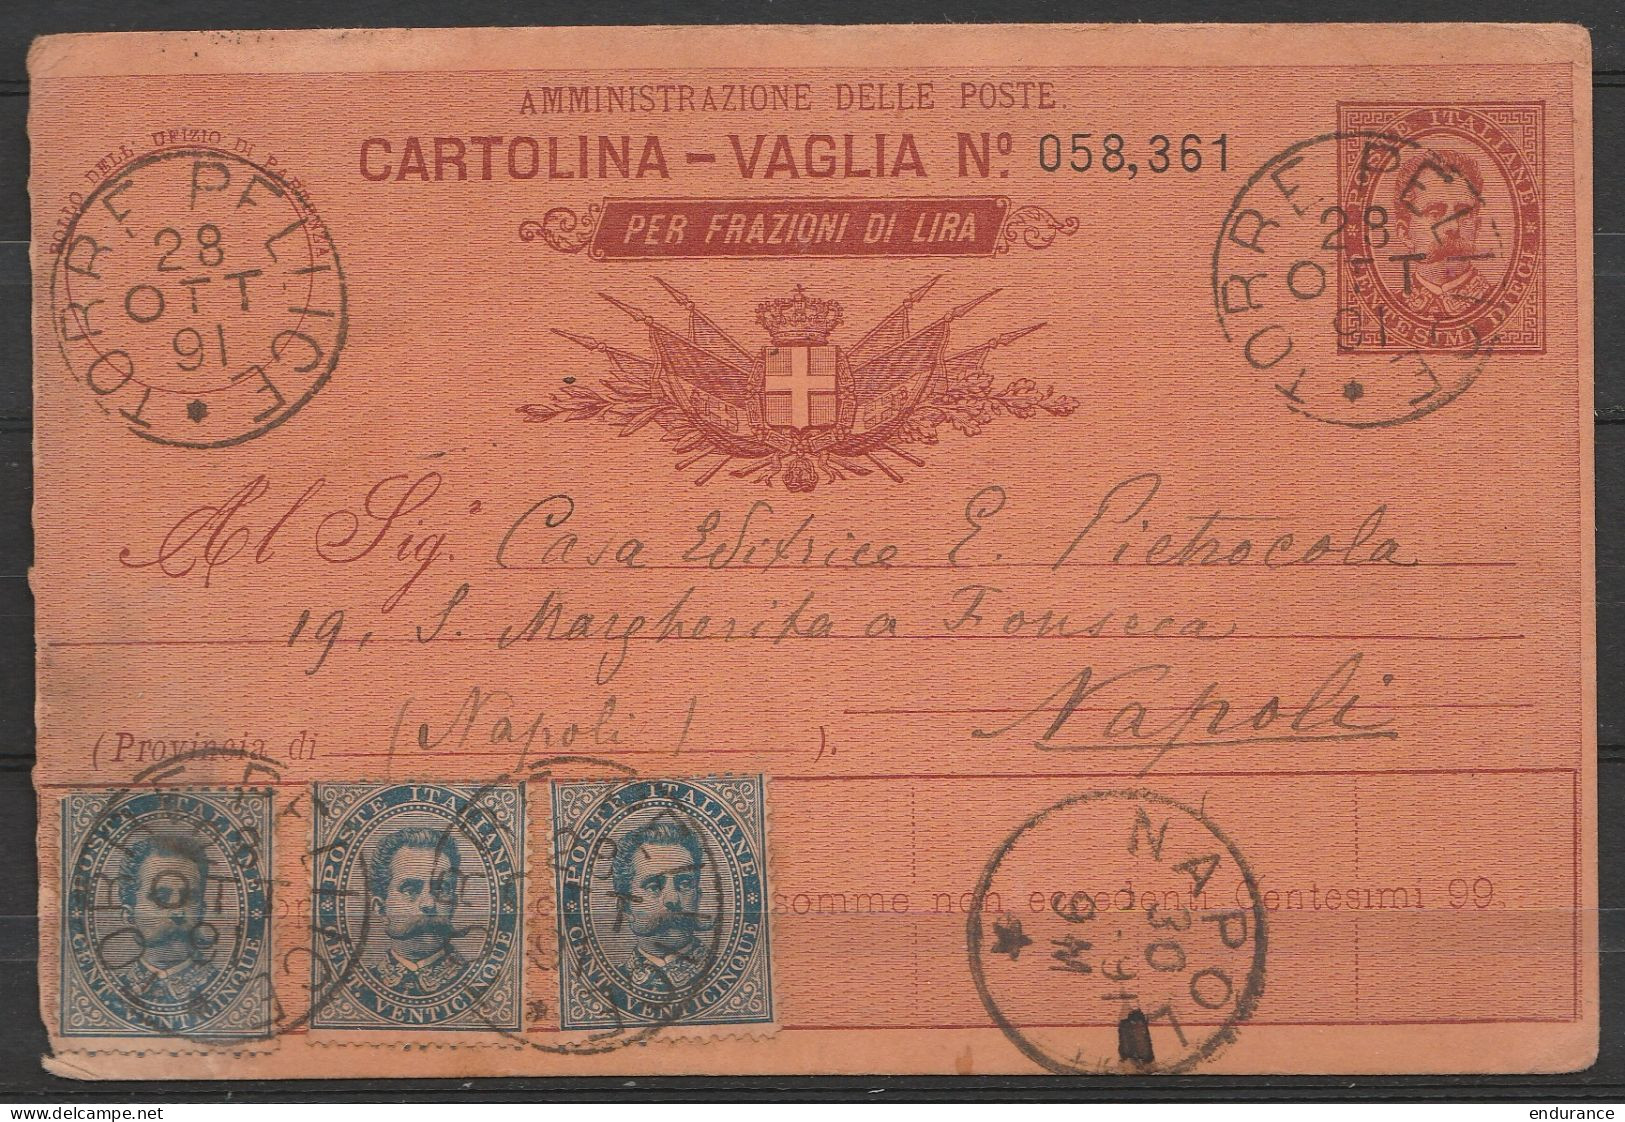 Italie - Cartolina-Vaglia Per Frazioni Di Lira 10c + 60c Càd TORRE PELLICE /28 OTT 1891 Pour NAPOLI (état - Voir Scans) - Ganzsachen